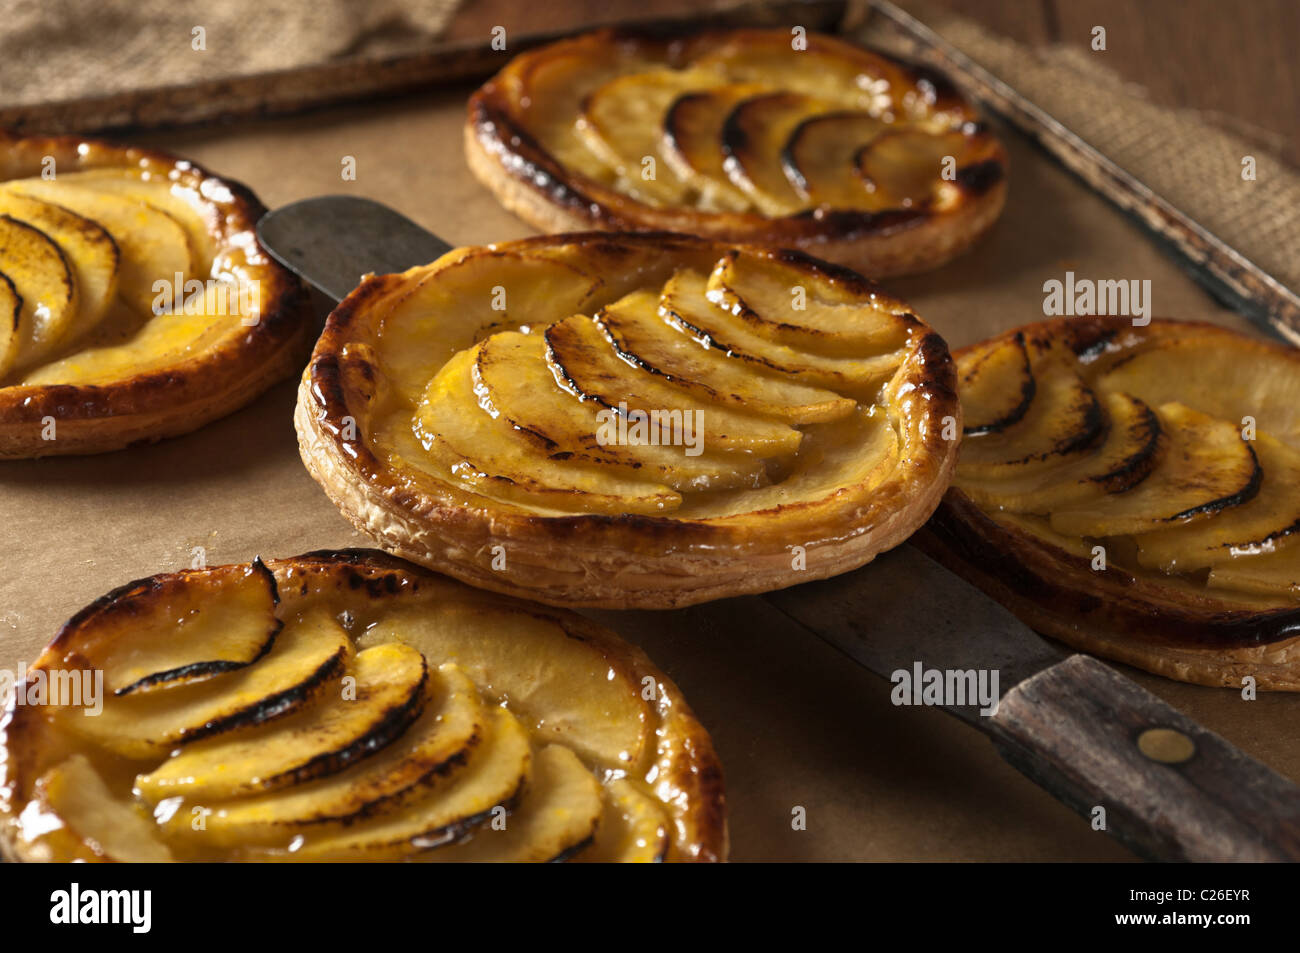 Tartes fines aux pommes. French apple tarts Stock Photo